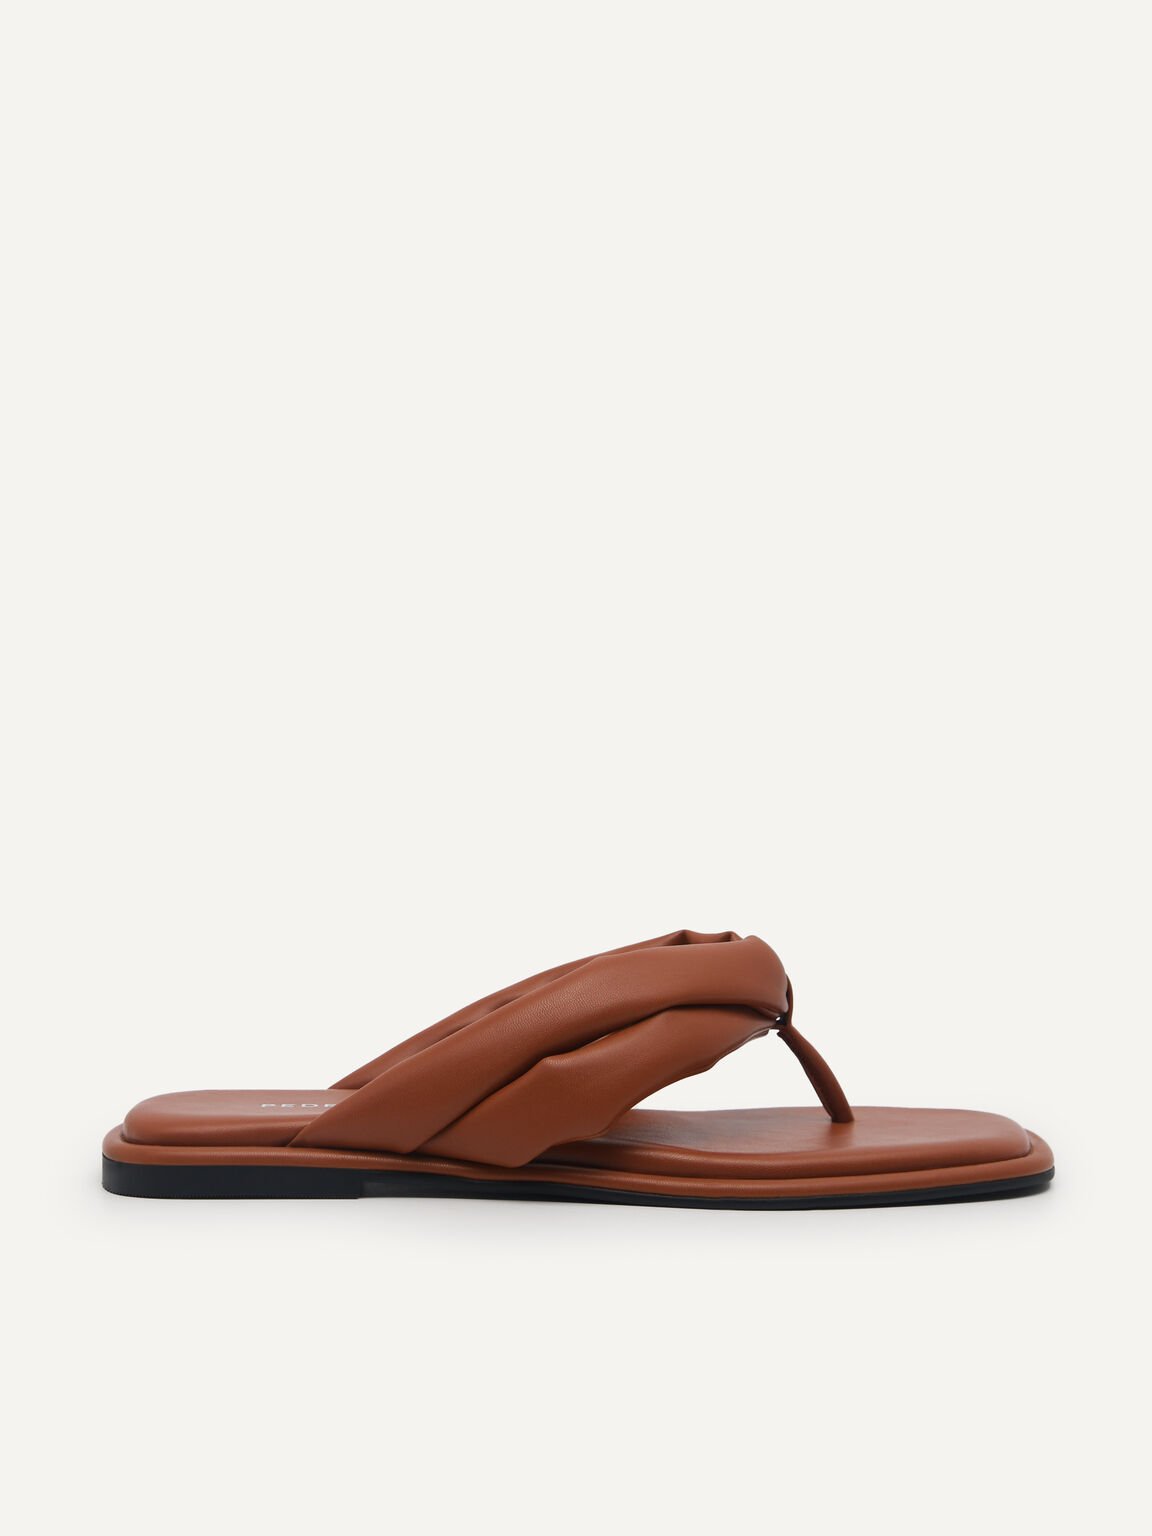 Padded Sandals, Camel